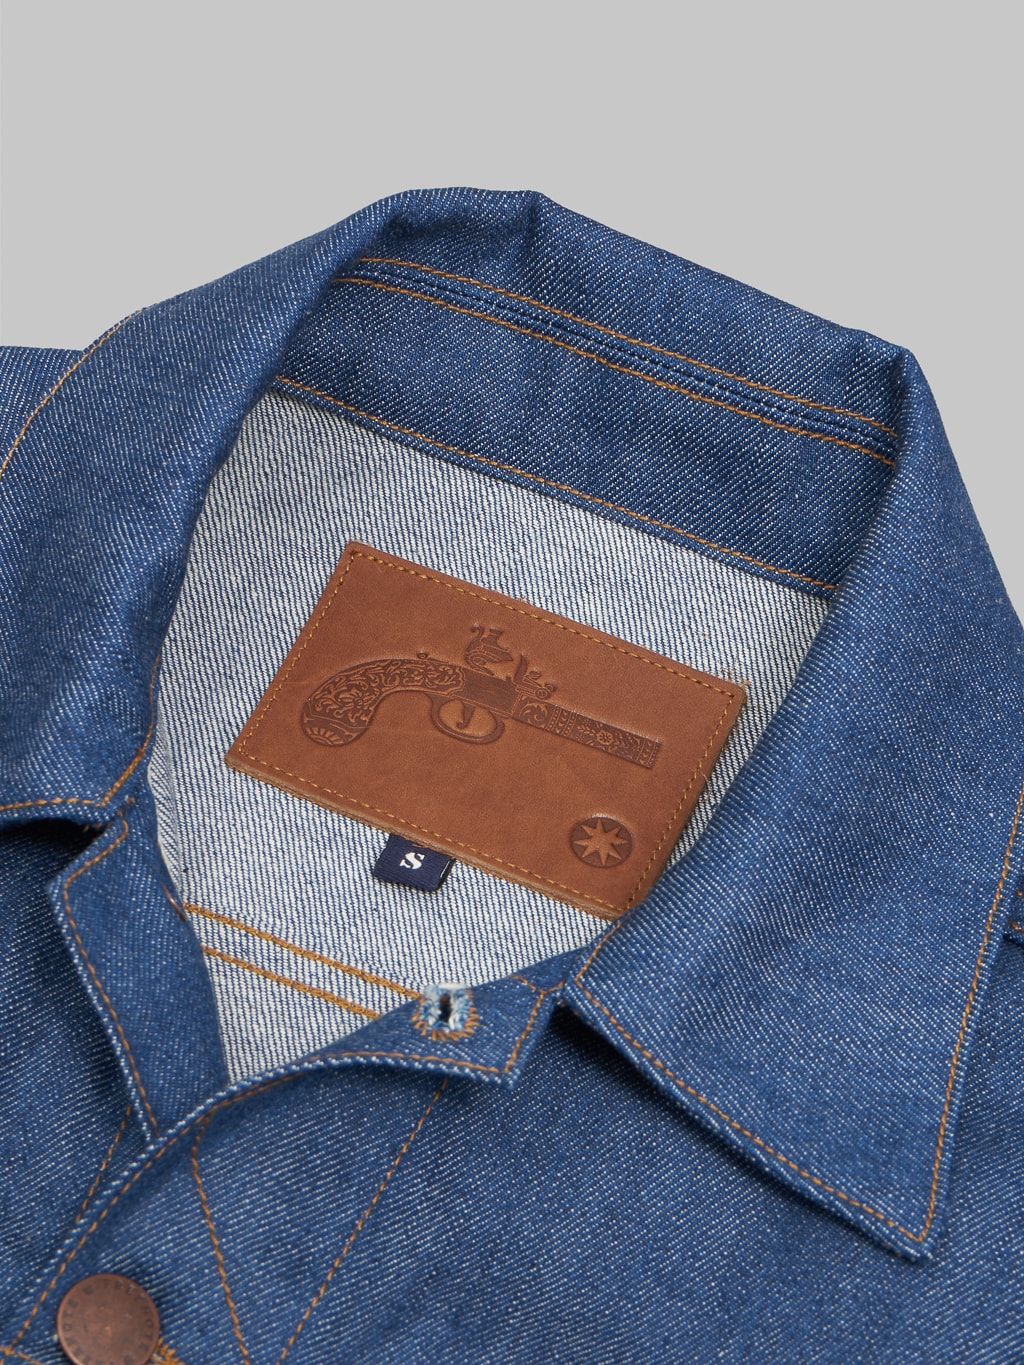 freenote cloth classic denim jacket vintage blue denim SB tanning leather patch